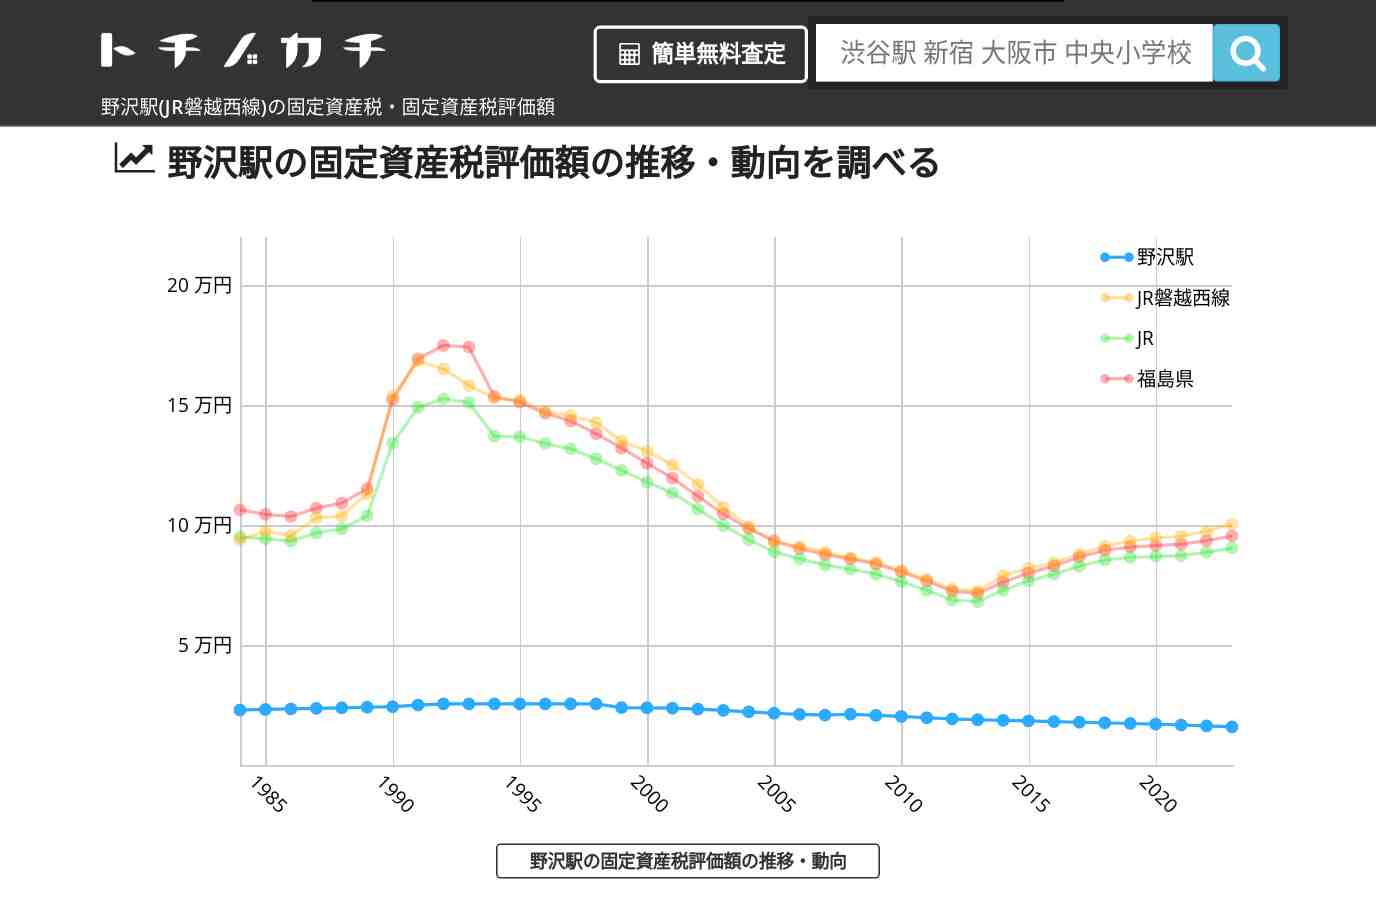 野沢駅(JR磐越西線)の固定資産税・固定資産税評価額 | トチノカチ